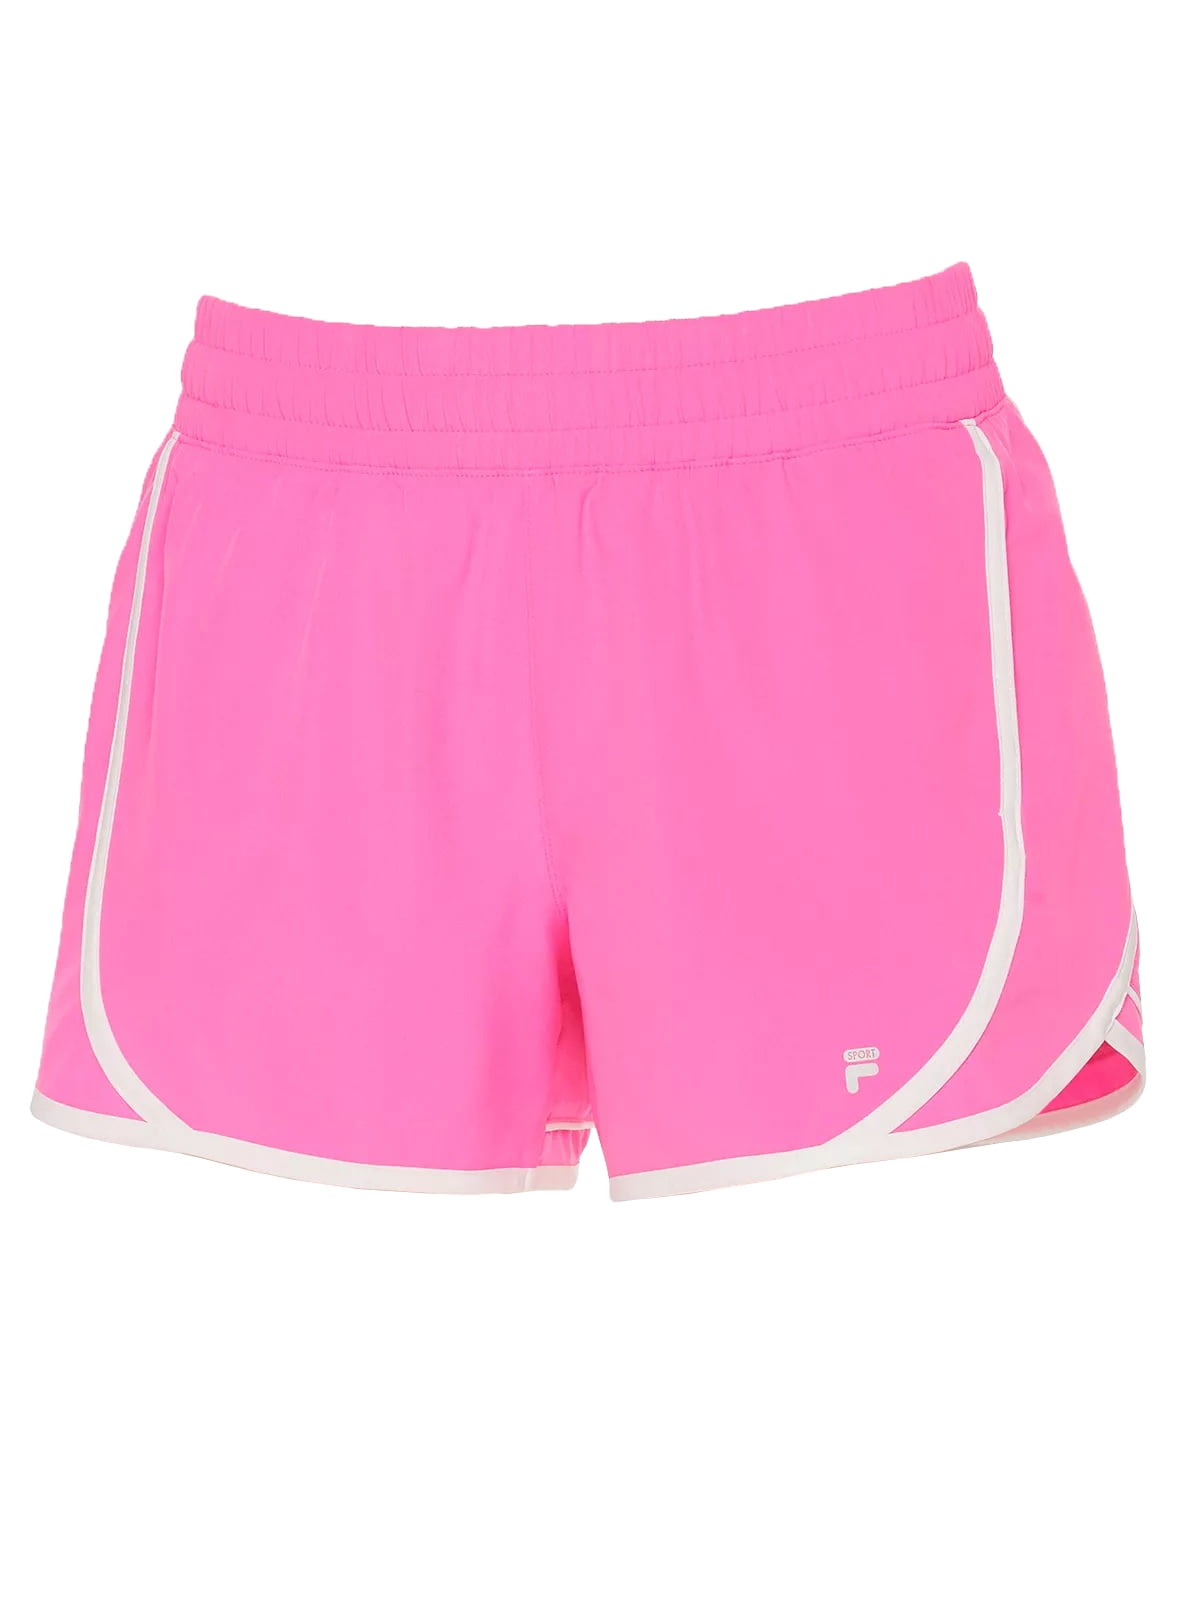 Fila Sport Women's Athletic Sport Mid Rise Shorts Pink Trillion WF84V302RS1 - Walmart.com